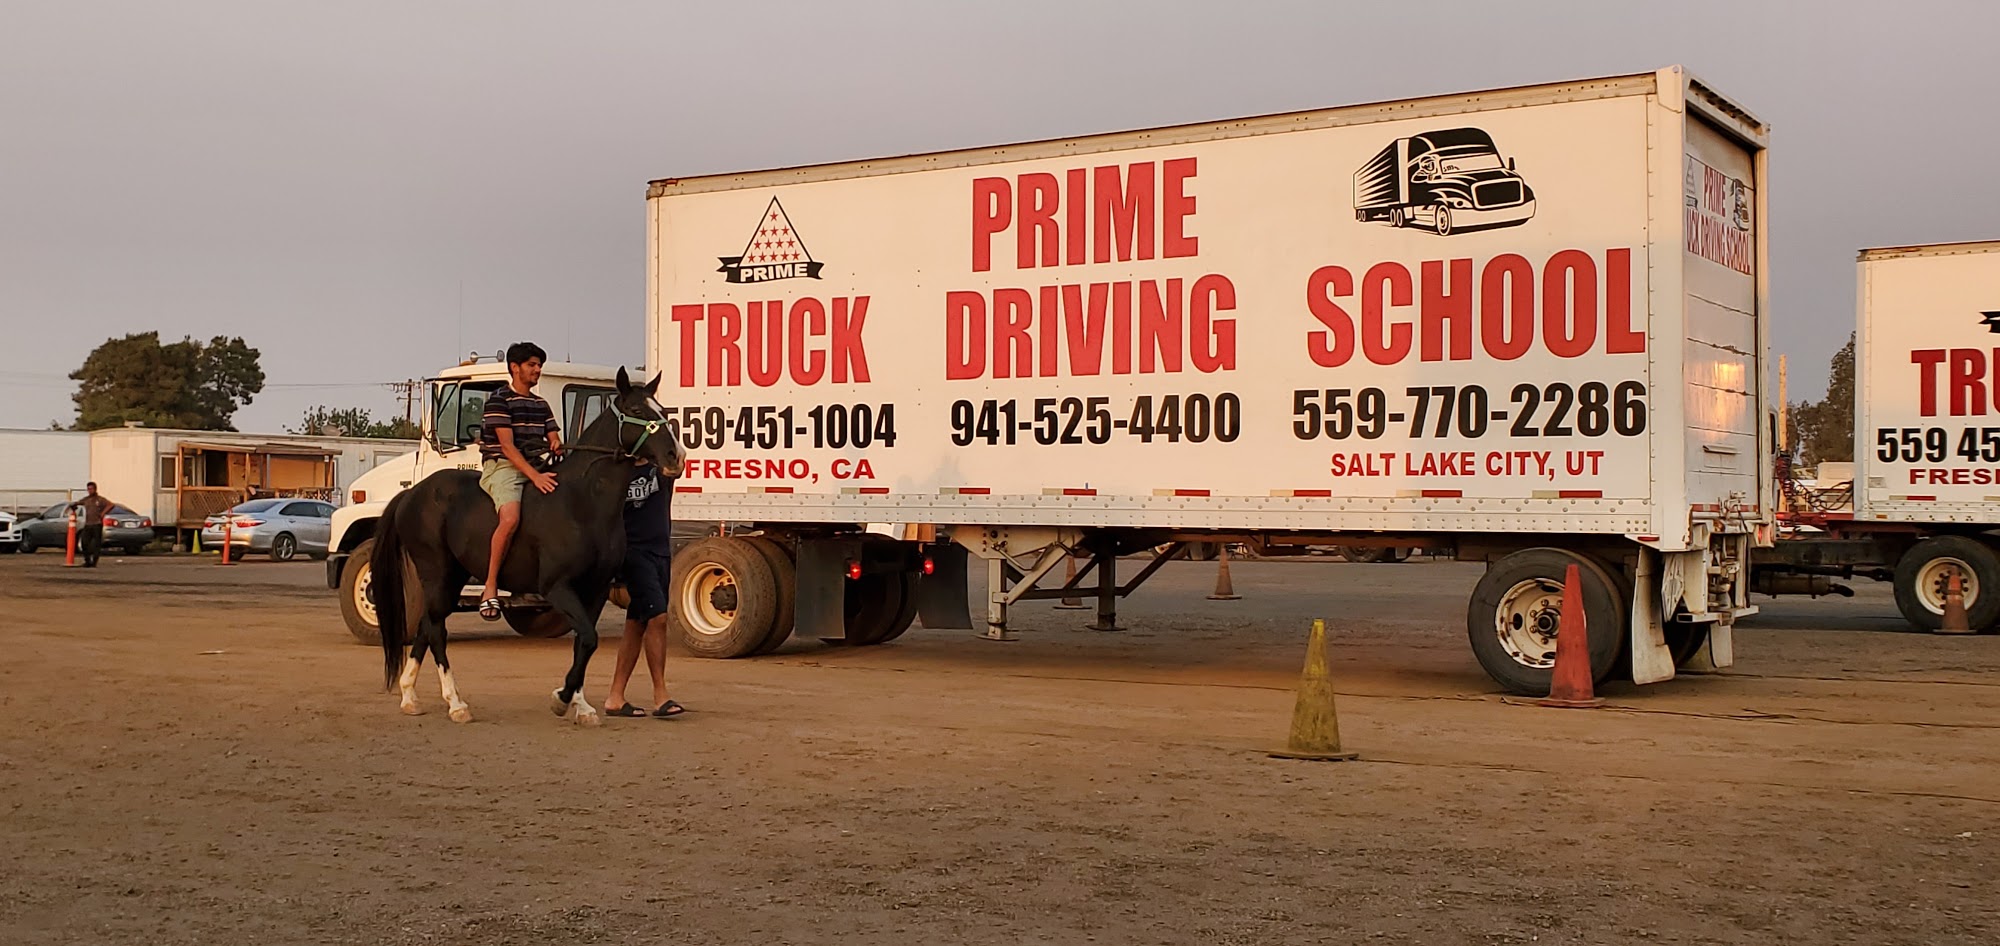 Prime Truck Driving School